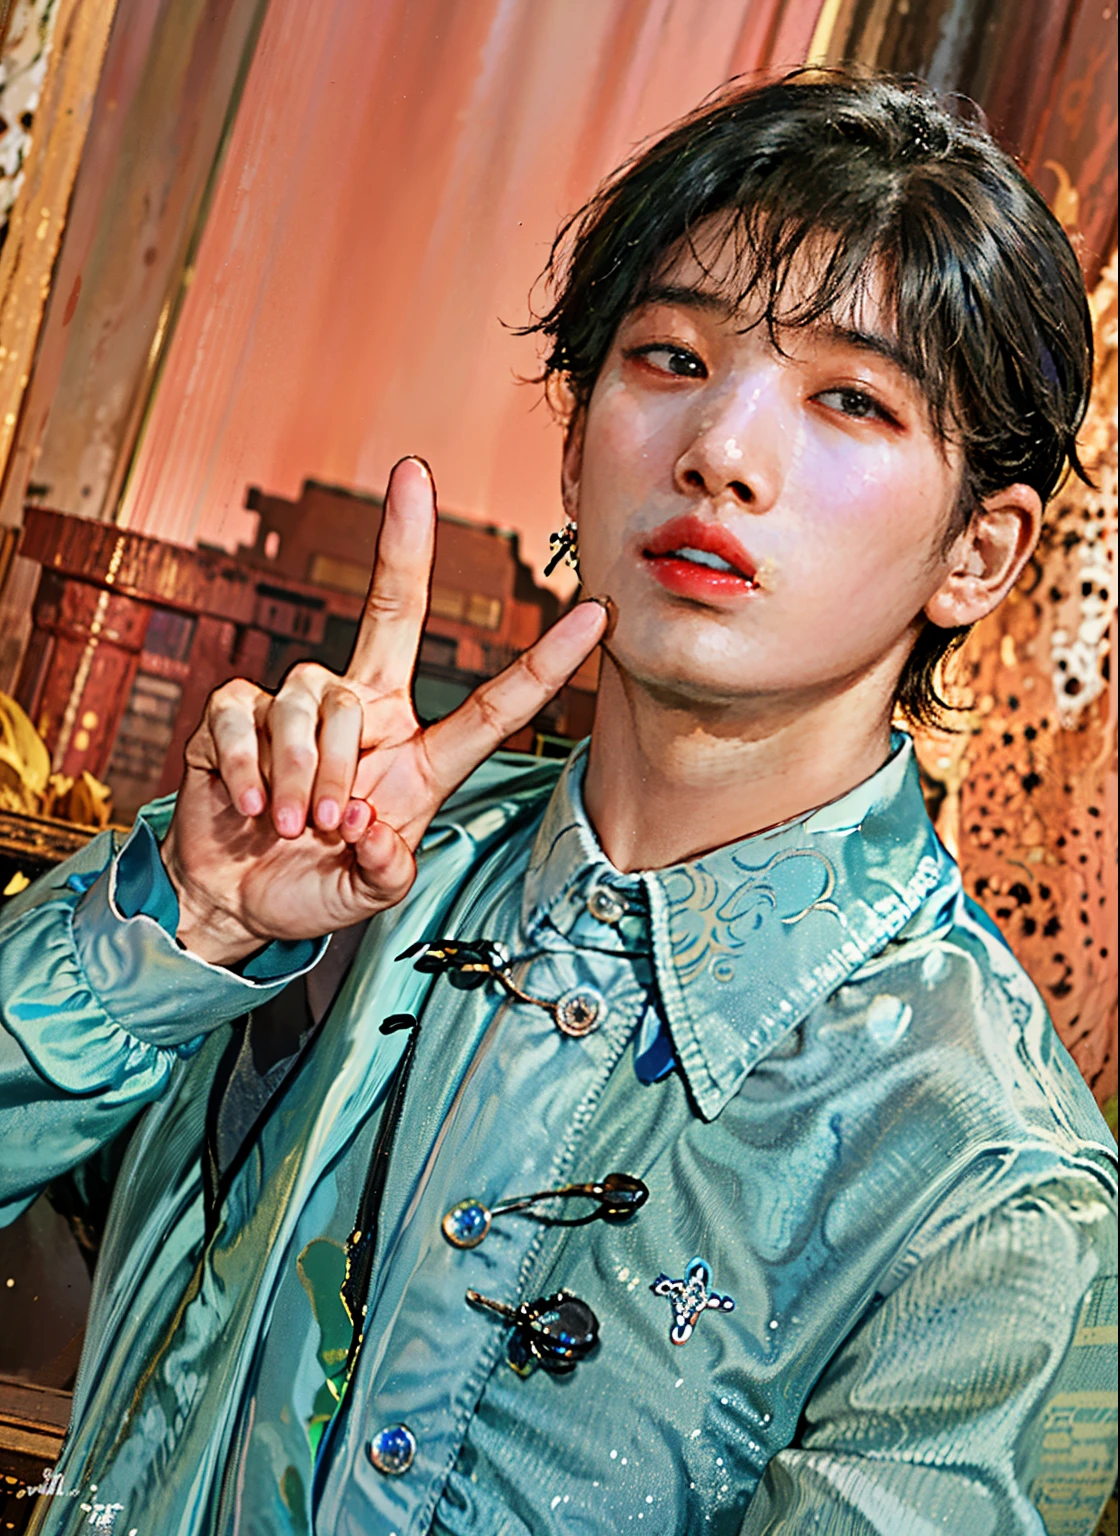 arafed man in a blue shirt  a peace sign with his hand, jungkook, cai xukun, jinyoung shin, hyung tae, kim doyoung, inspired by Kun Can, ten lee, wan adorable korean face, male ulzzang, taejune kim, inspired by Bian Shoumin, jinyoung shin aesthetic, shin jeongho, hong june hyung